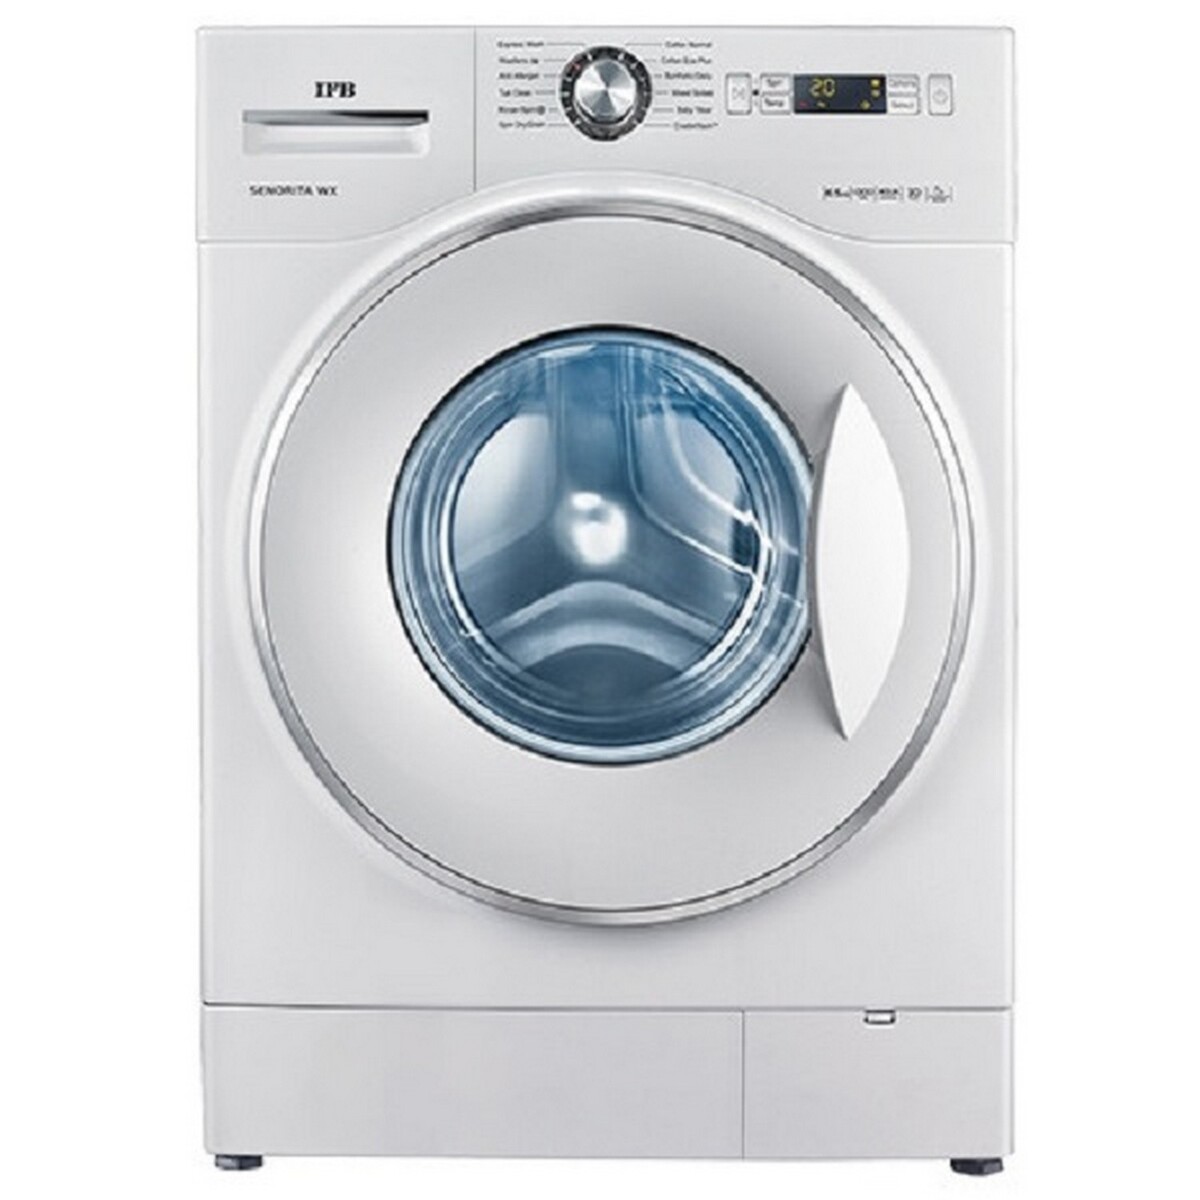 IFB Fully Automatic Washing Machine Senorita WX 6.5Kg